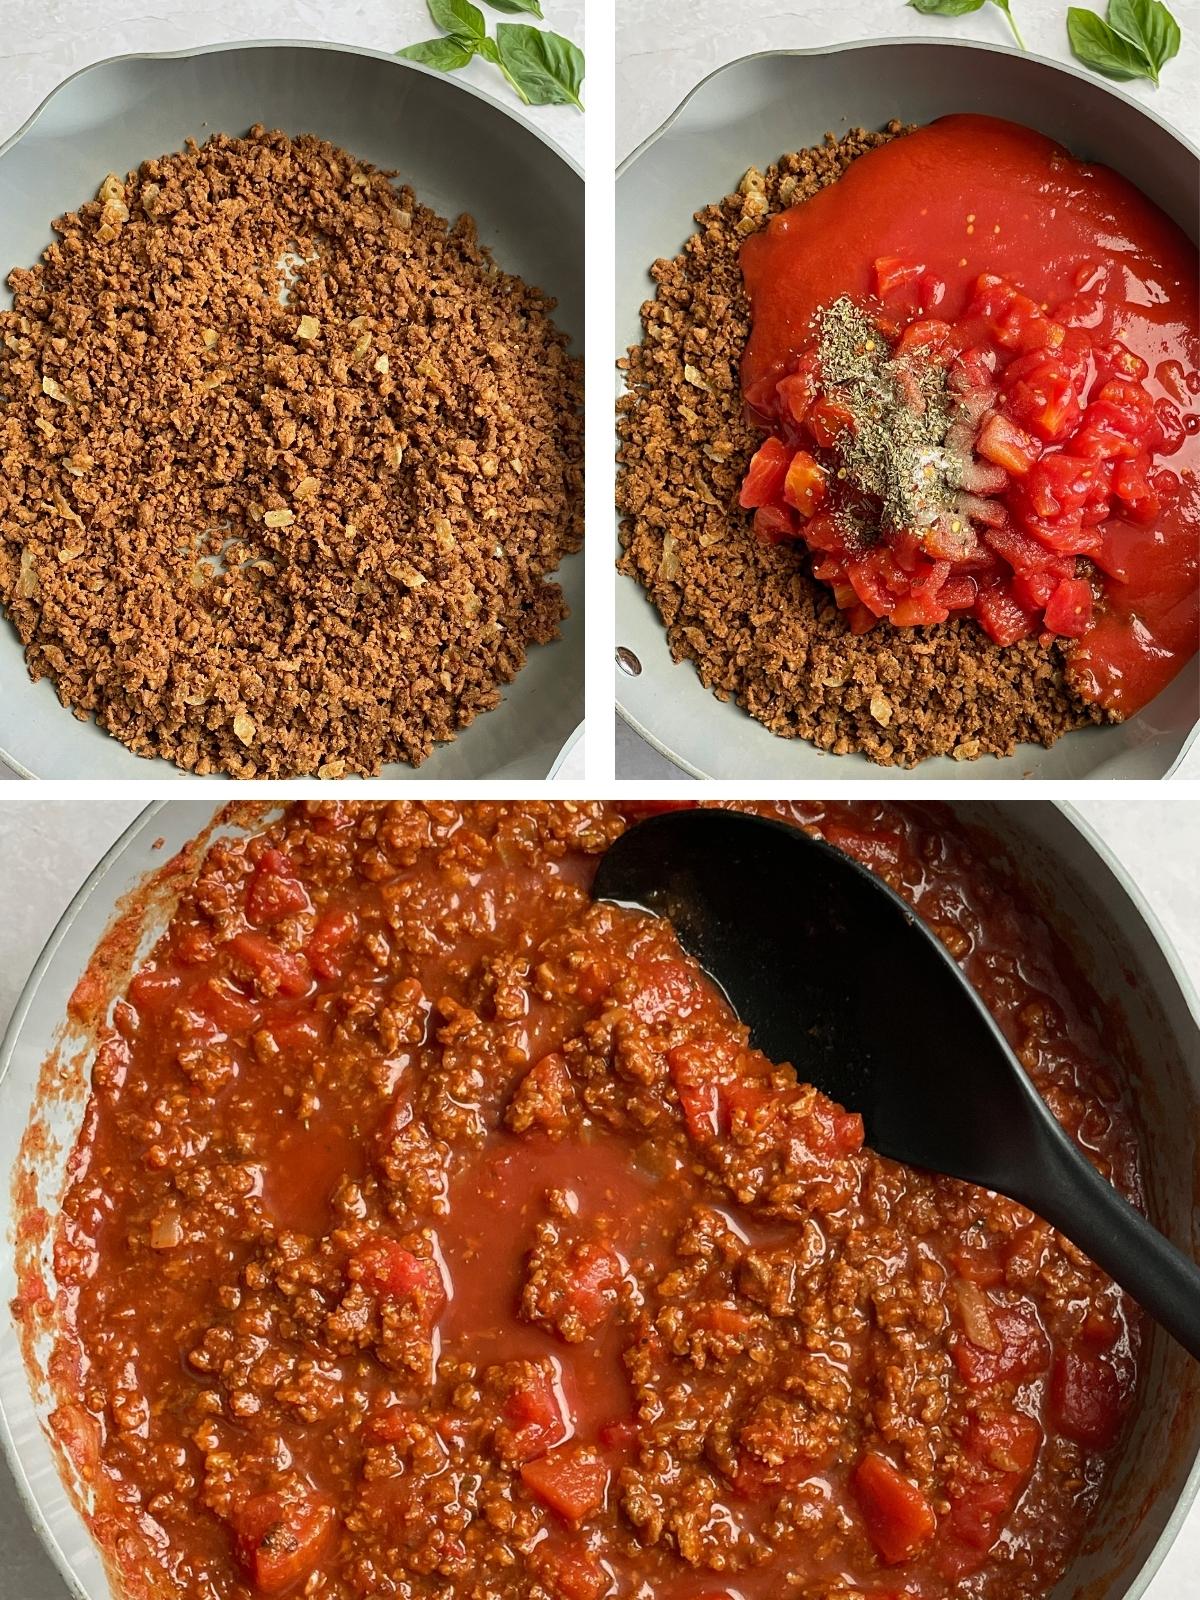 Meatless pasta sauce process steps.